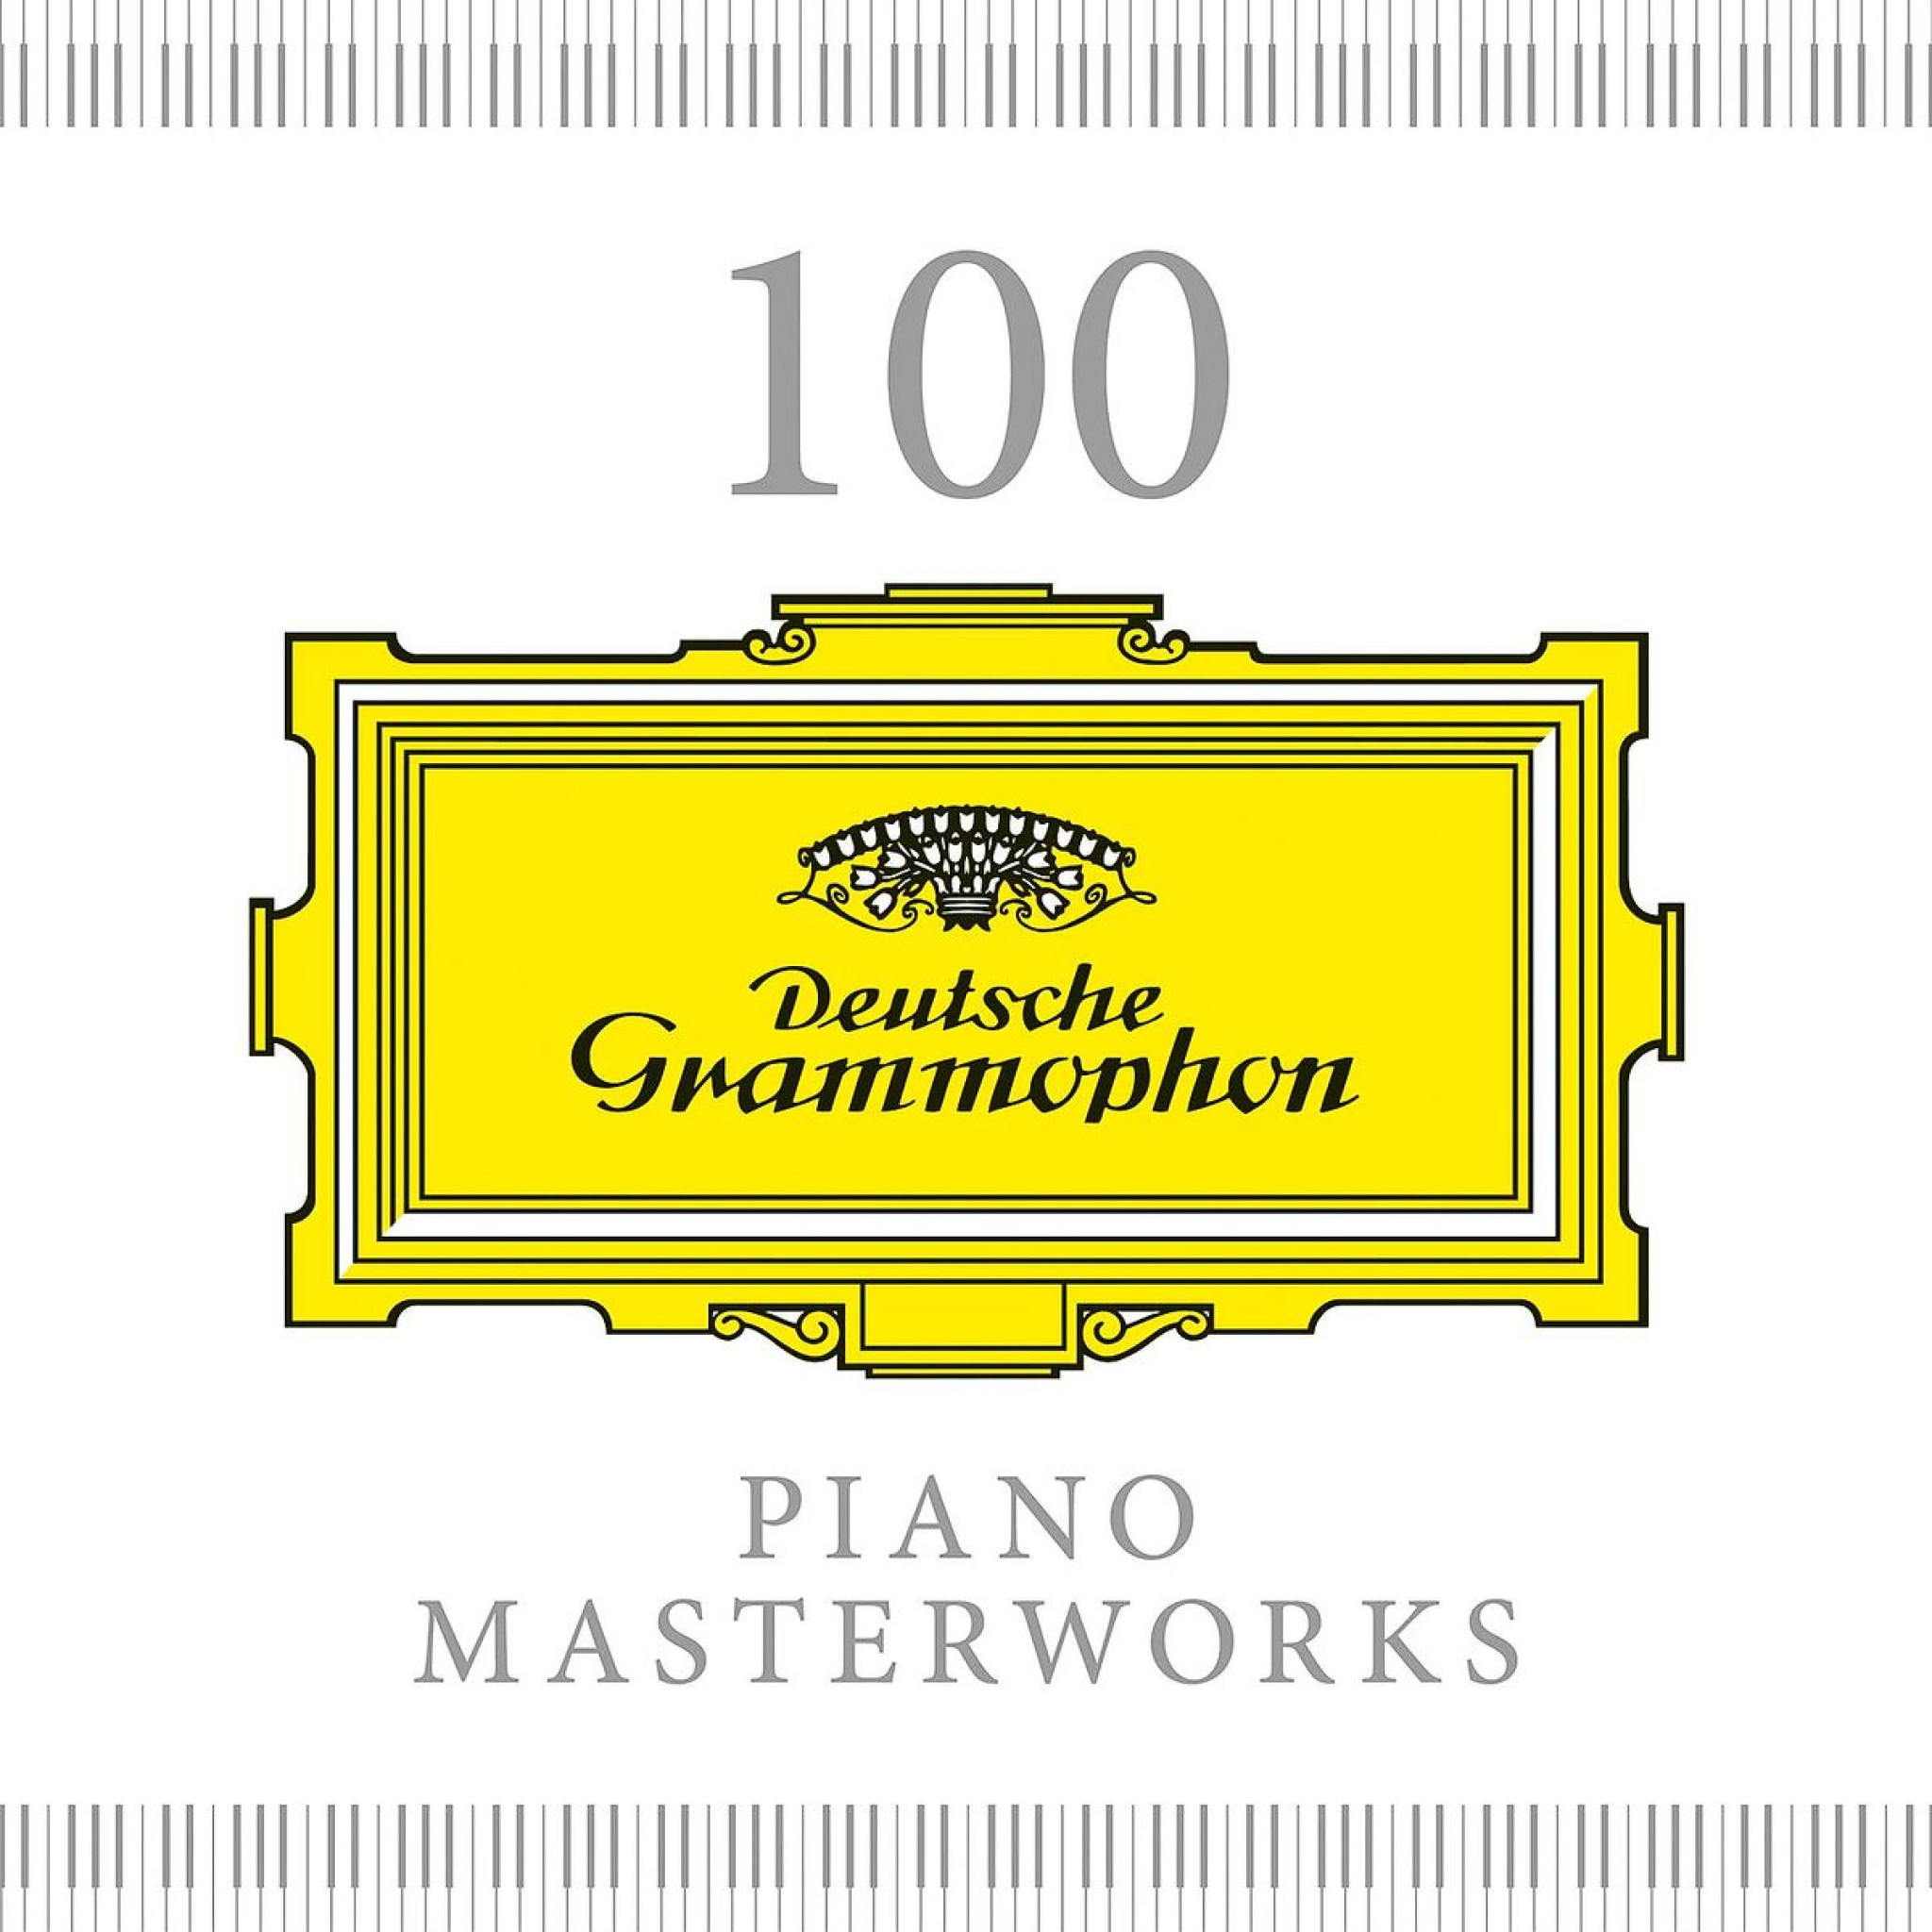 100 PIANO MASTERWORKS